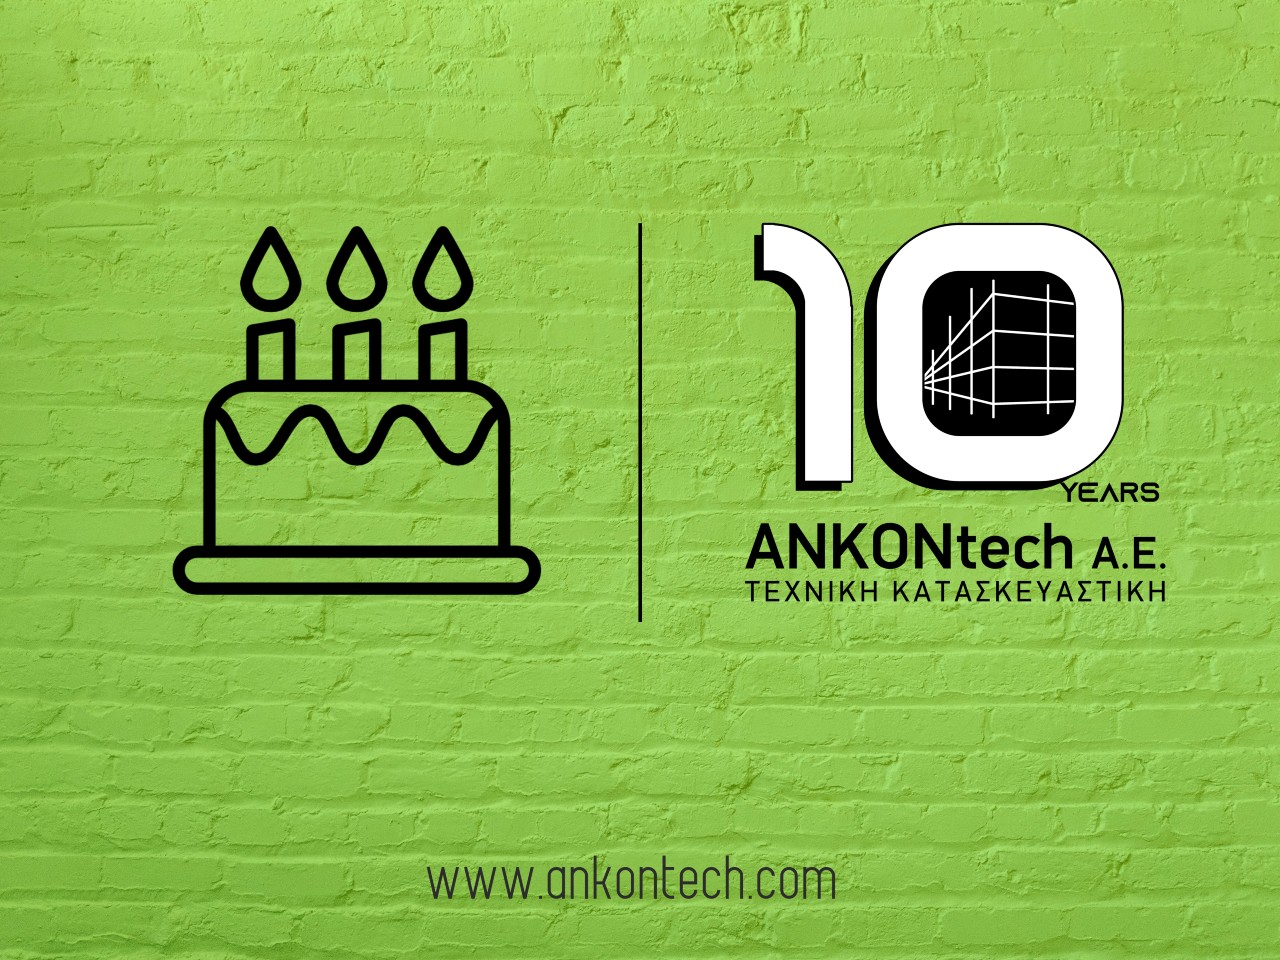 ankontech_-_10_years_hb.jpg